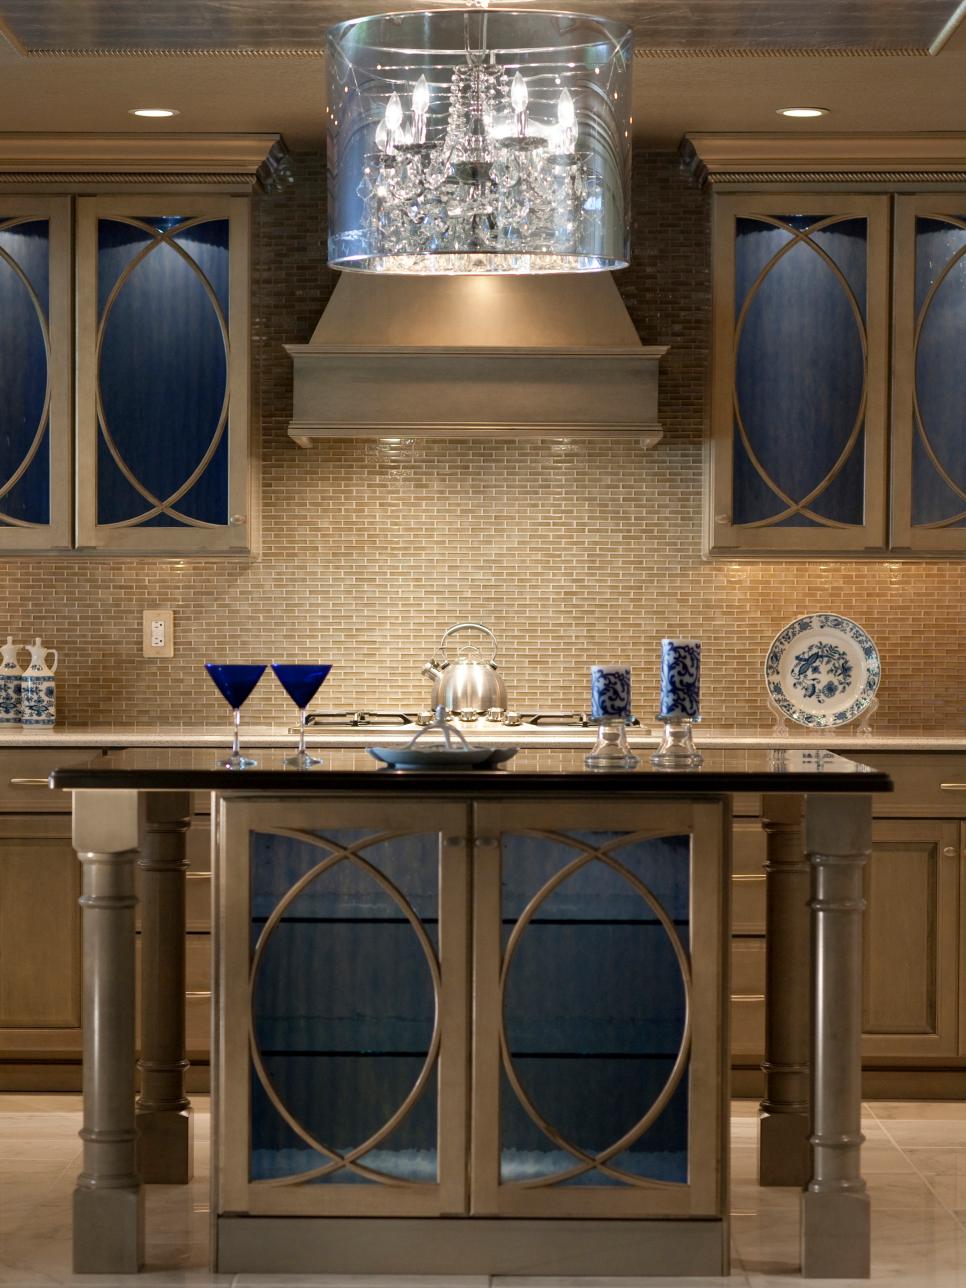 Elegant Neutral Kitchen With Contemporary Details and Tile Backsplash